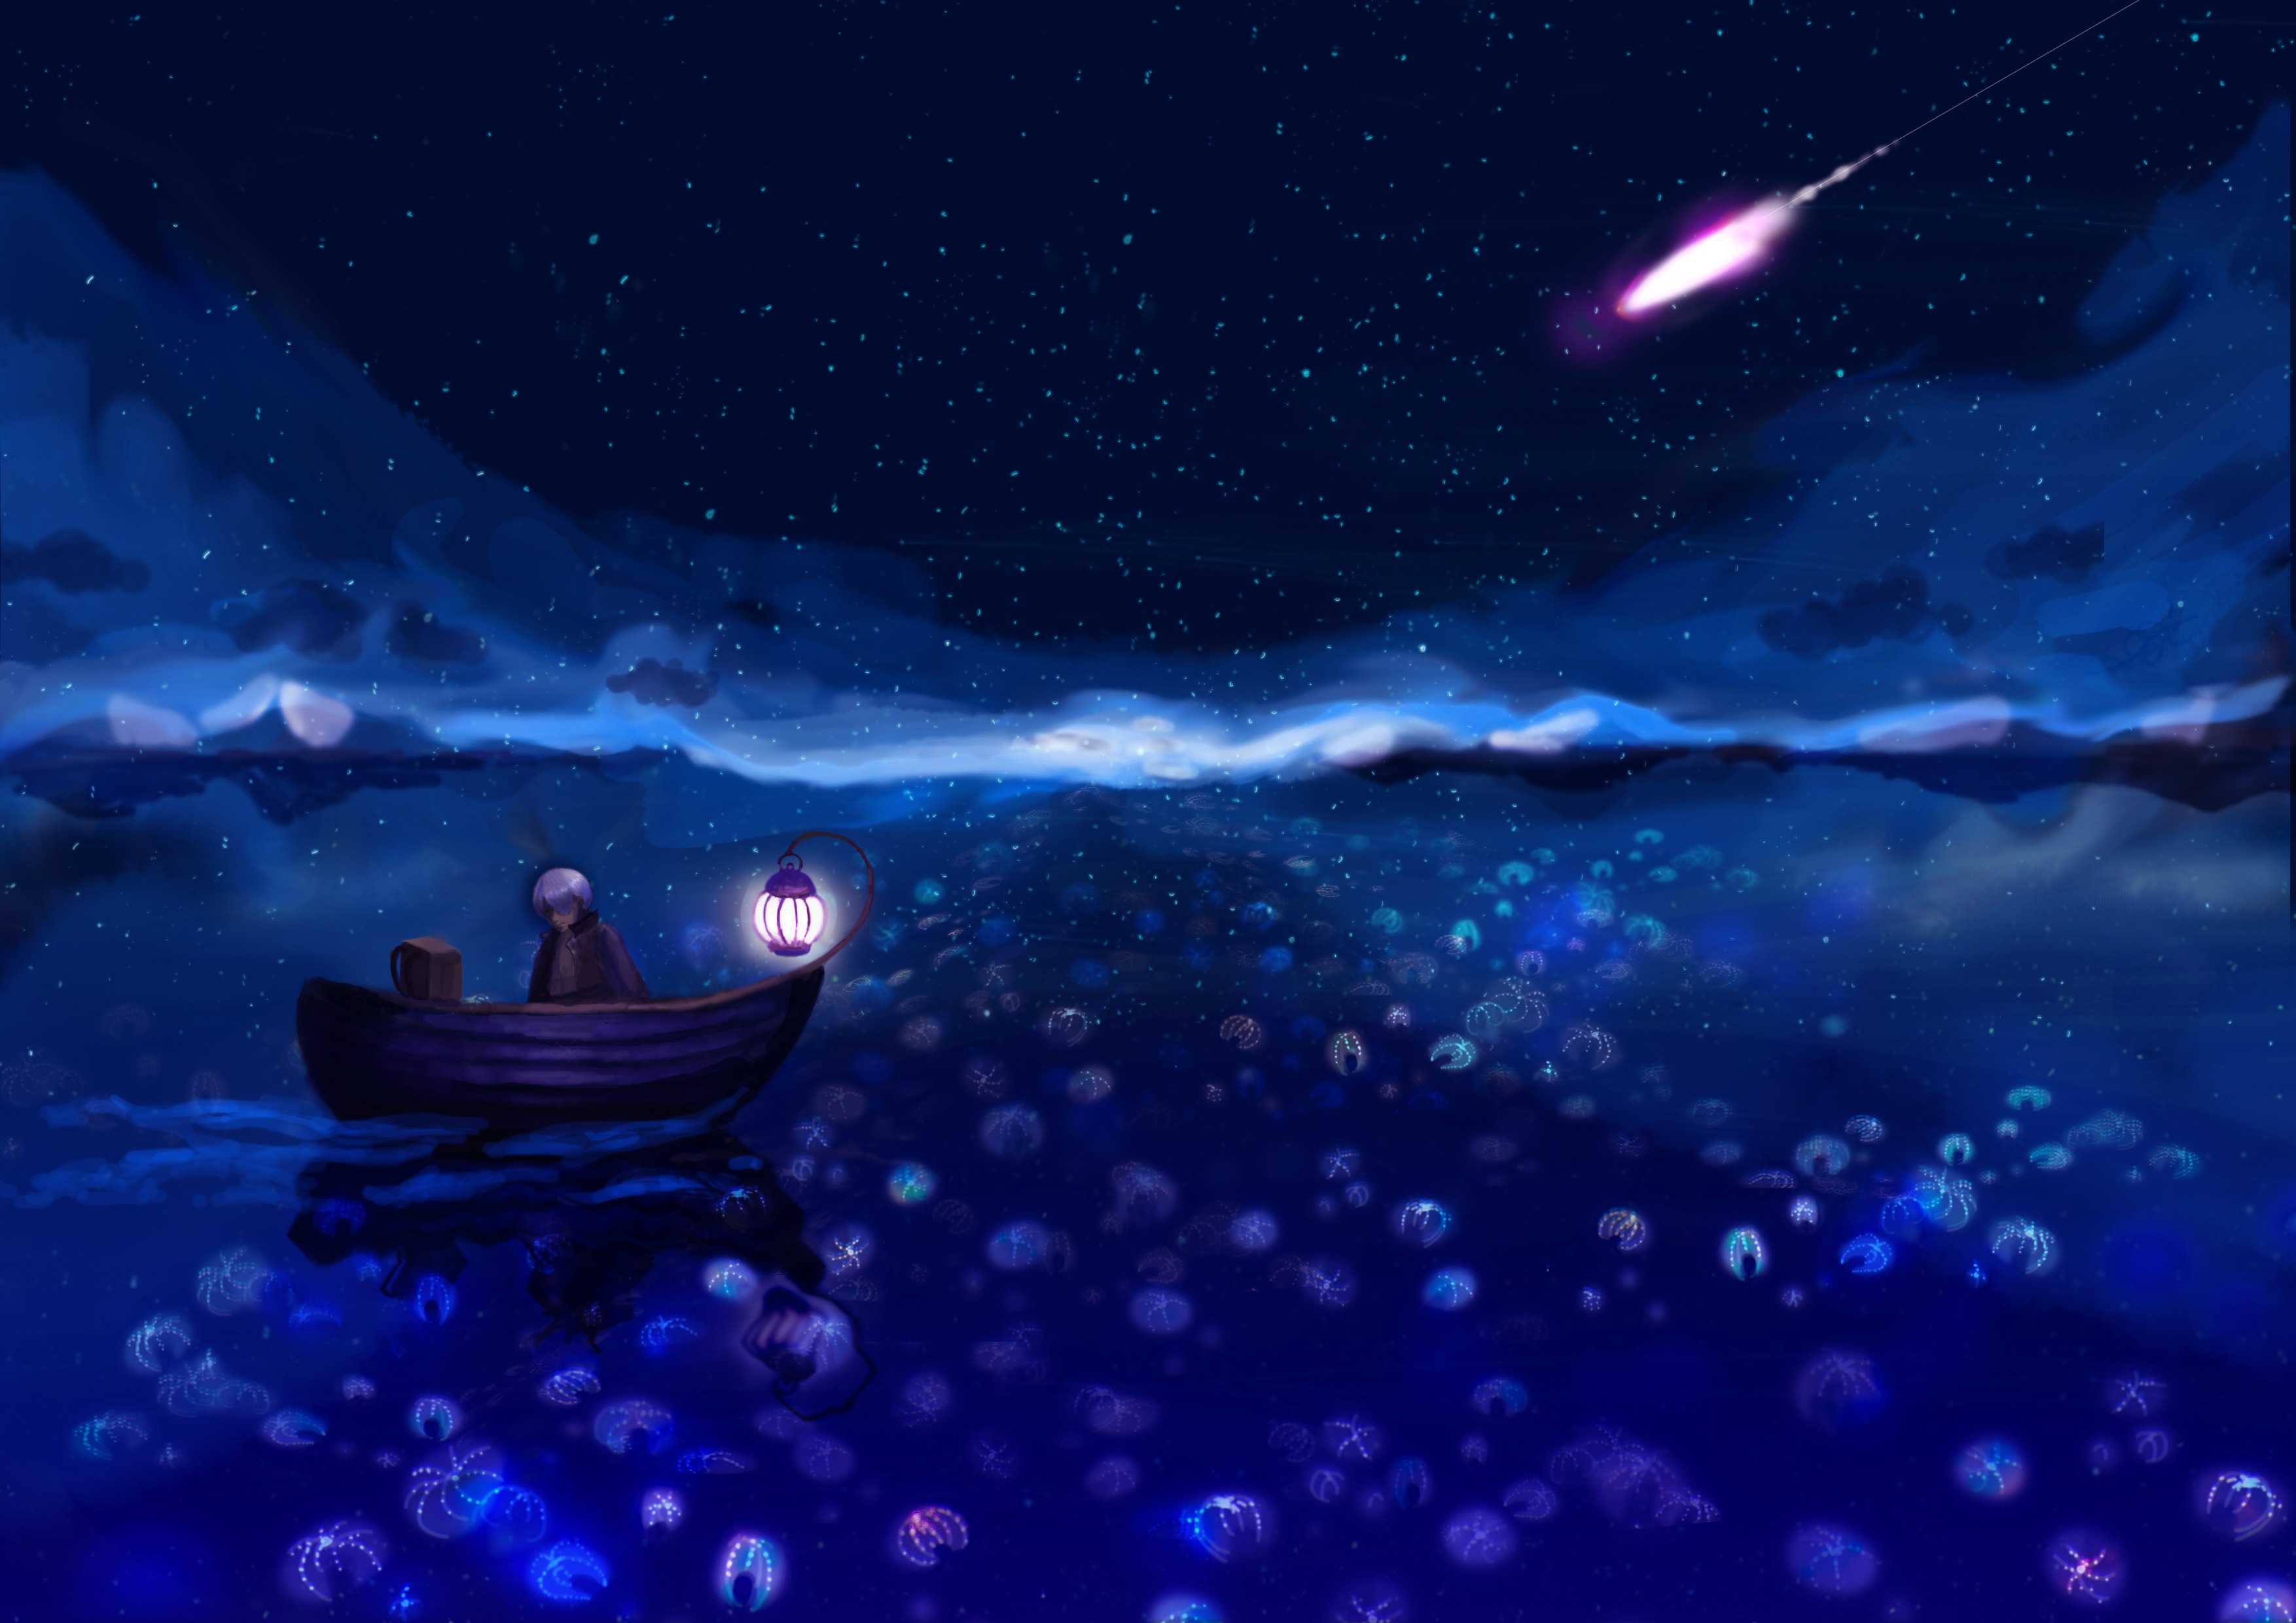 Наночь или на ночь. Лодка ночью. Лодка и звездное небо. Ночь фэнтези.